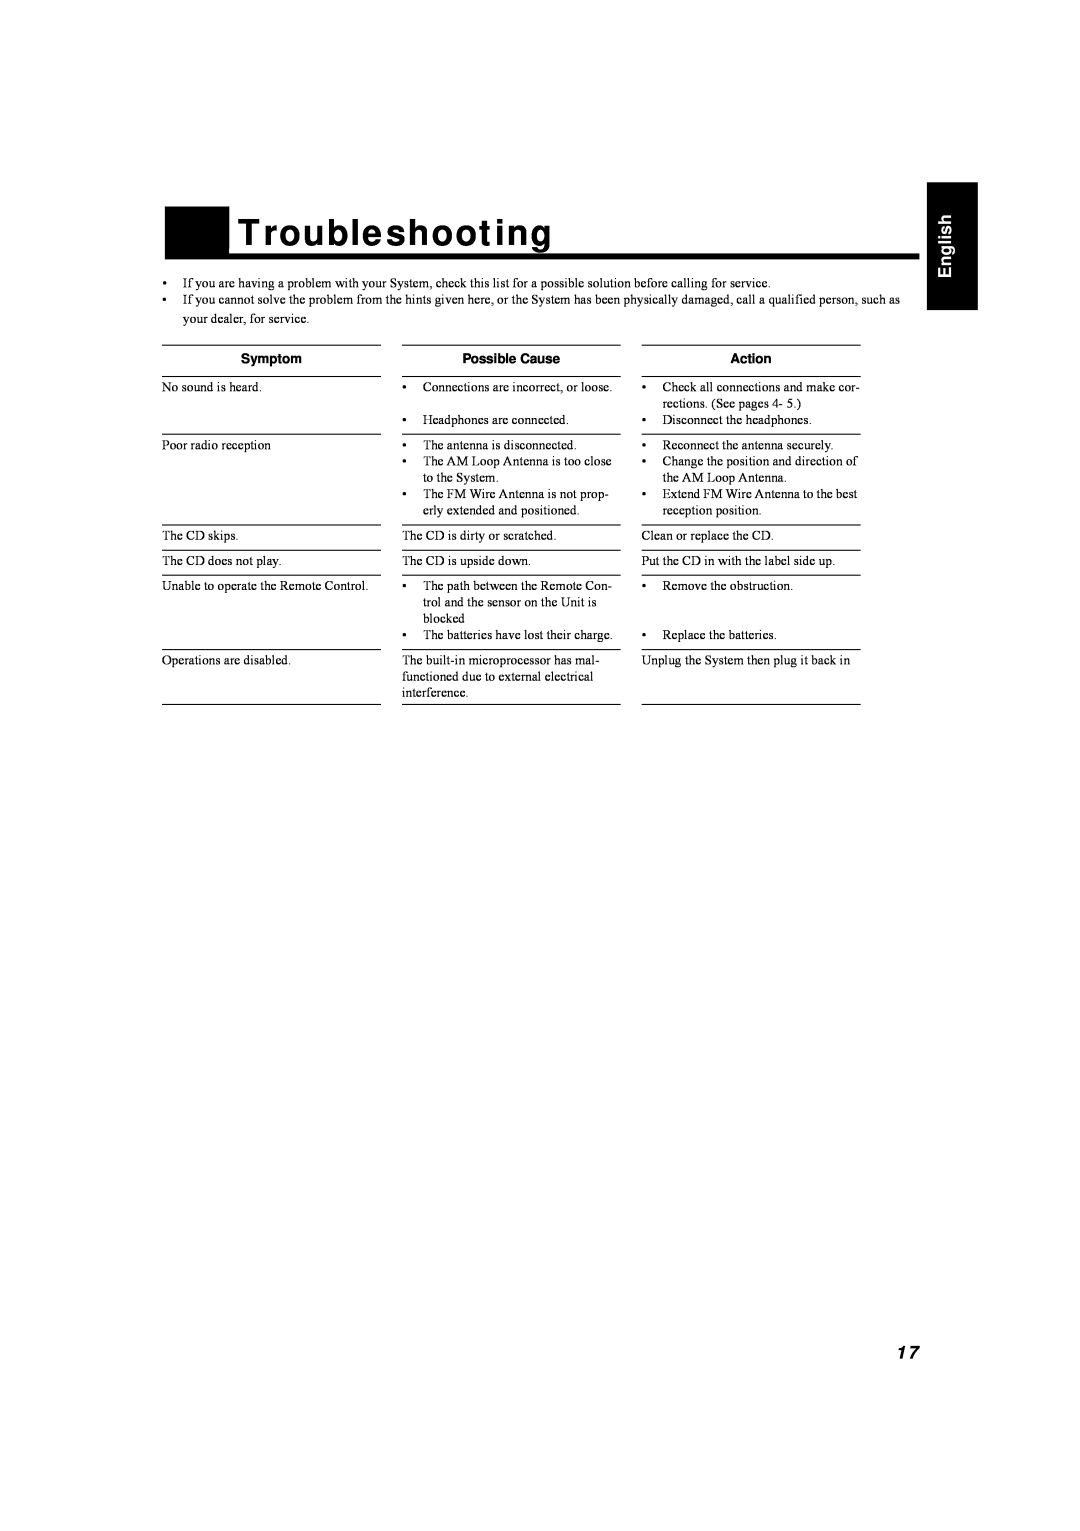 JVC UX-5500R manual Troubleshooting, English, Symptom, Possible Cause, Action 